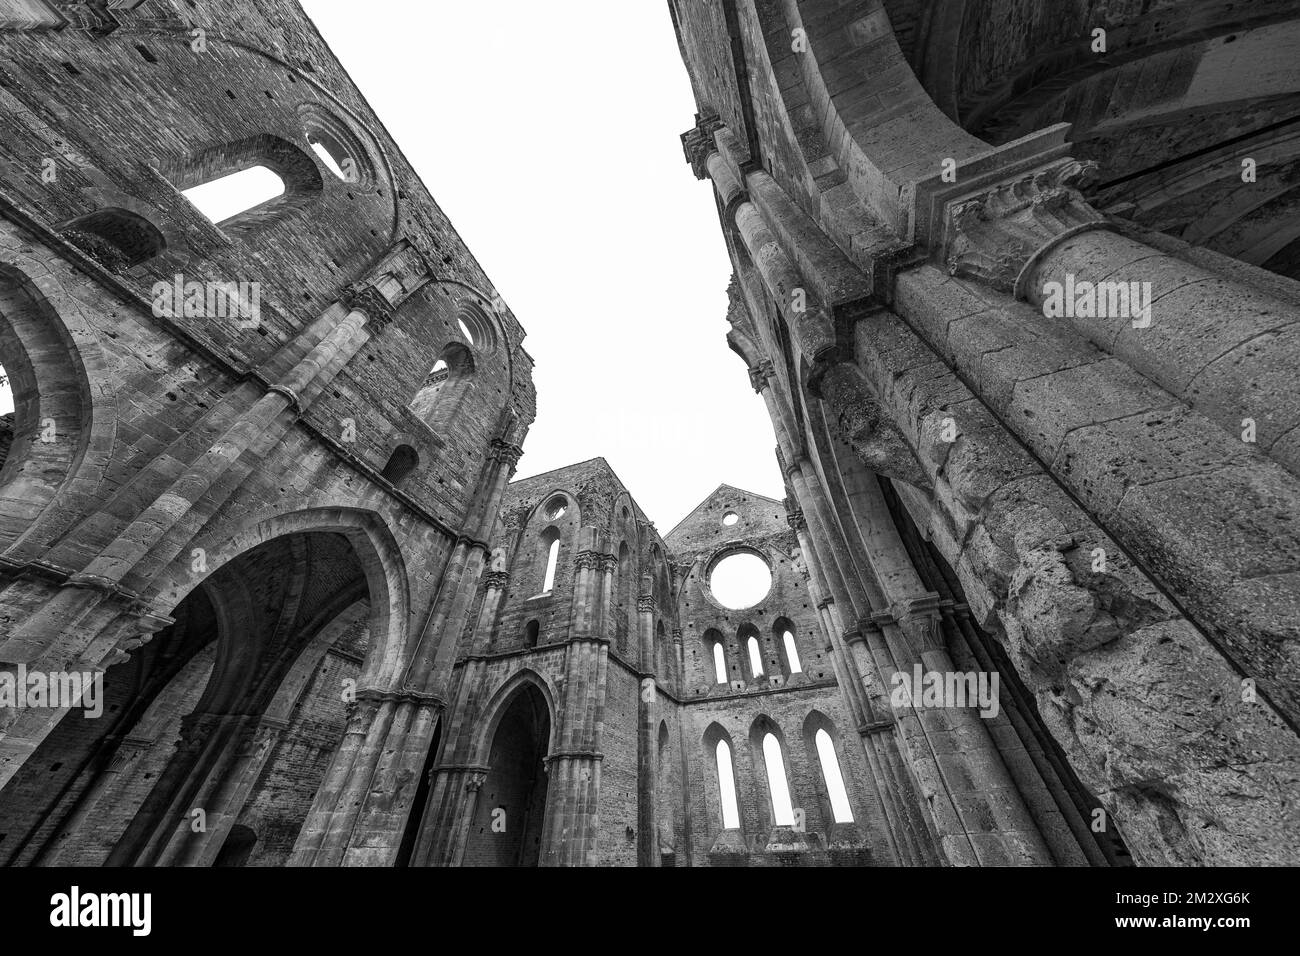 Archways of the ruined church of San Galgano Abbey, black and white photograph, near Monticiano, Tuscany, Italy Stock Photo